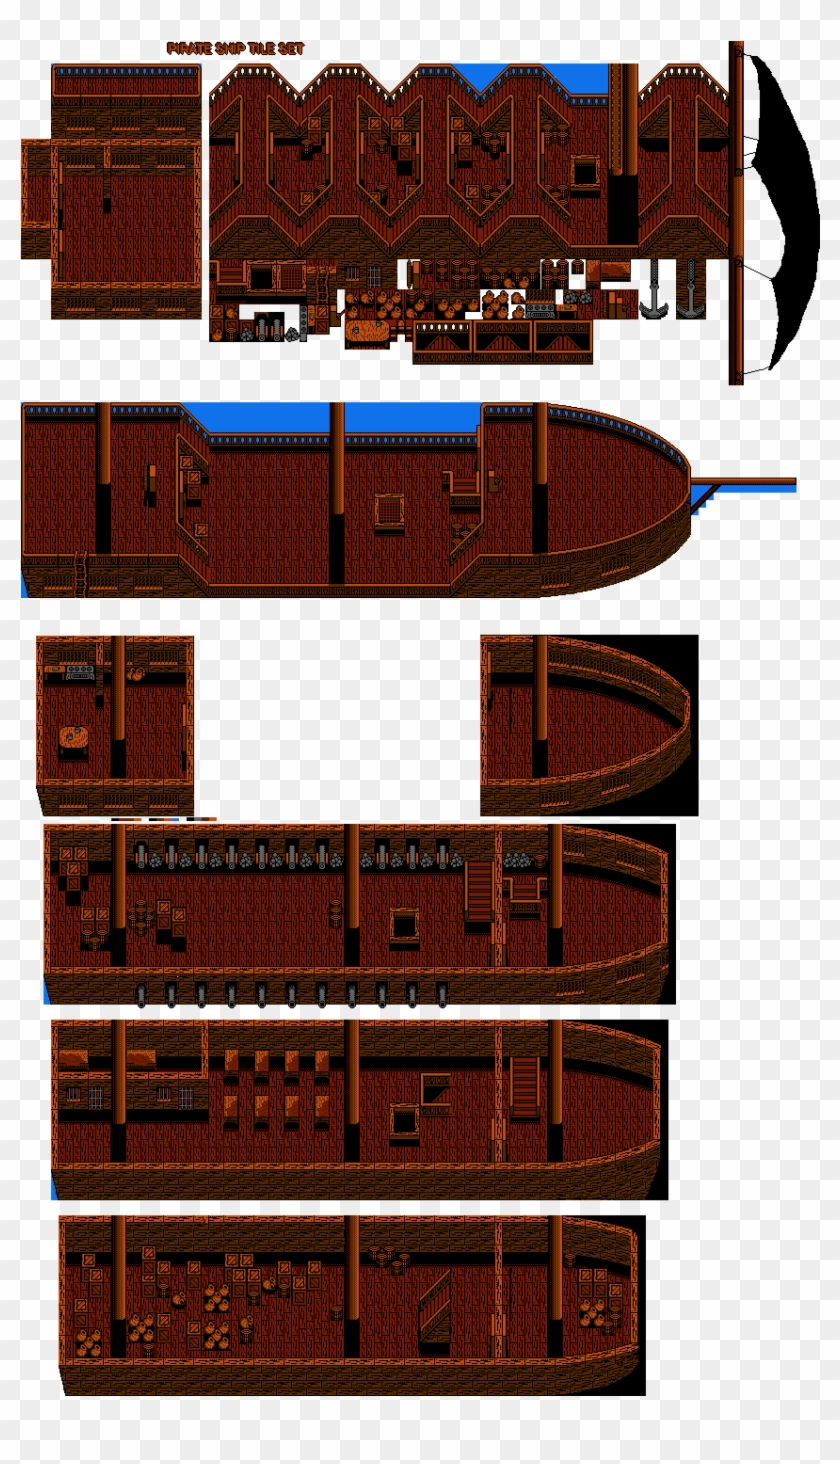 Pirate Ship Tile Set Sheet - Wood Clipart #489424